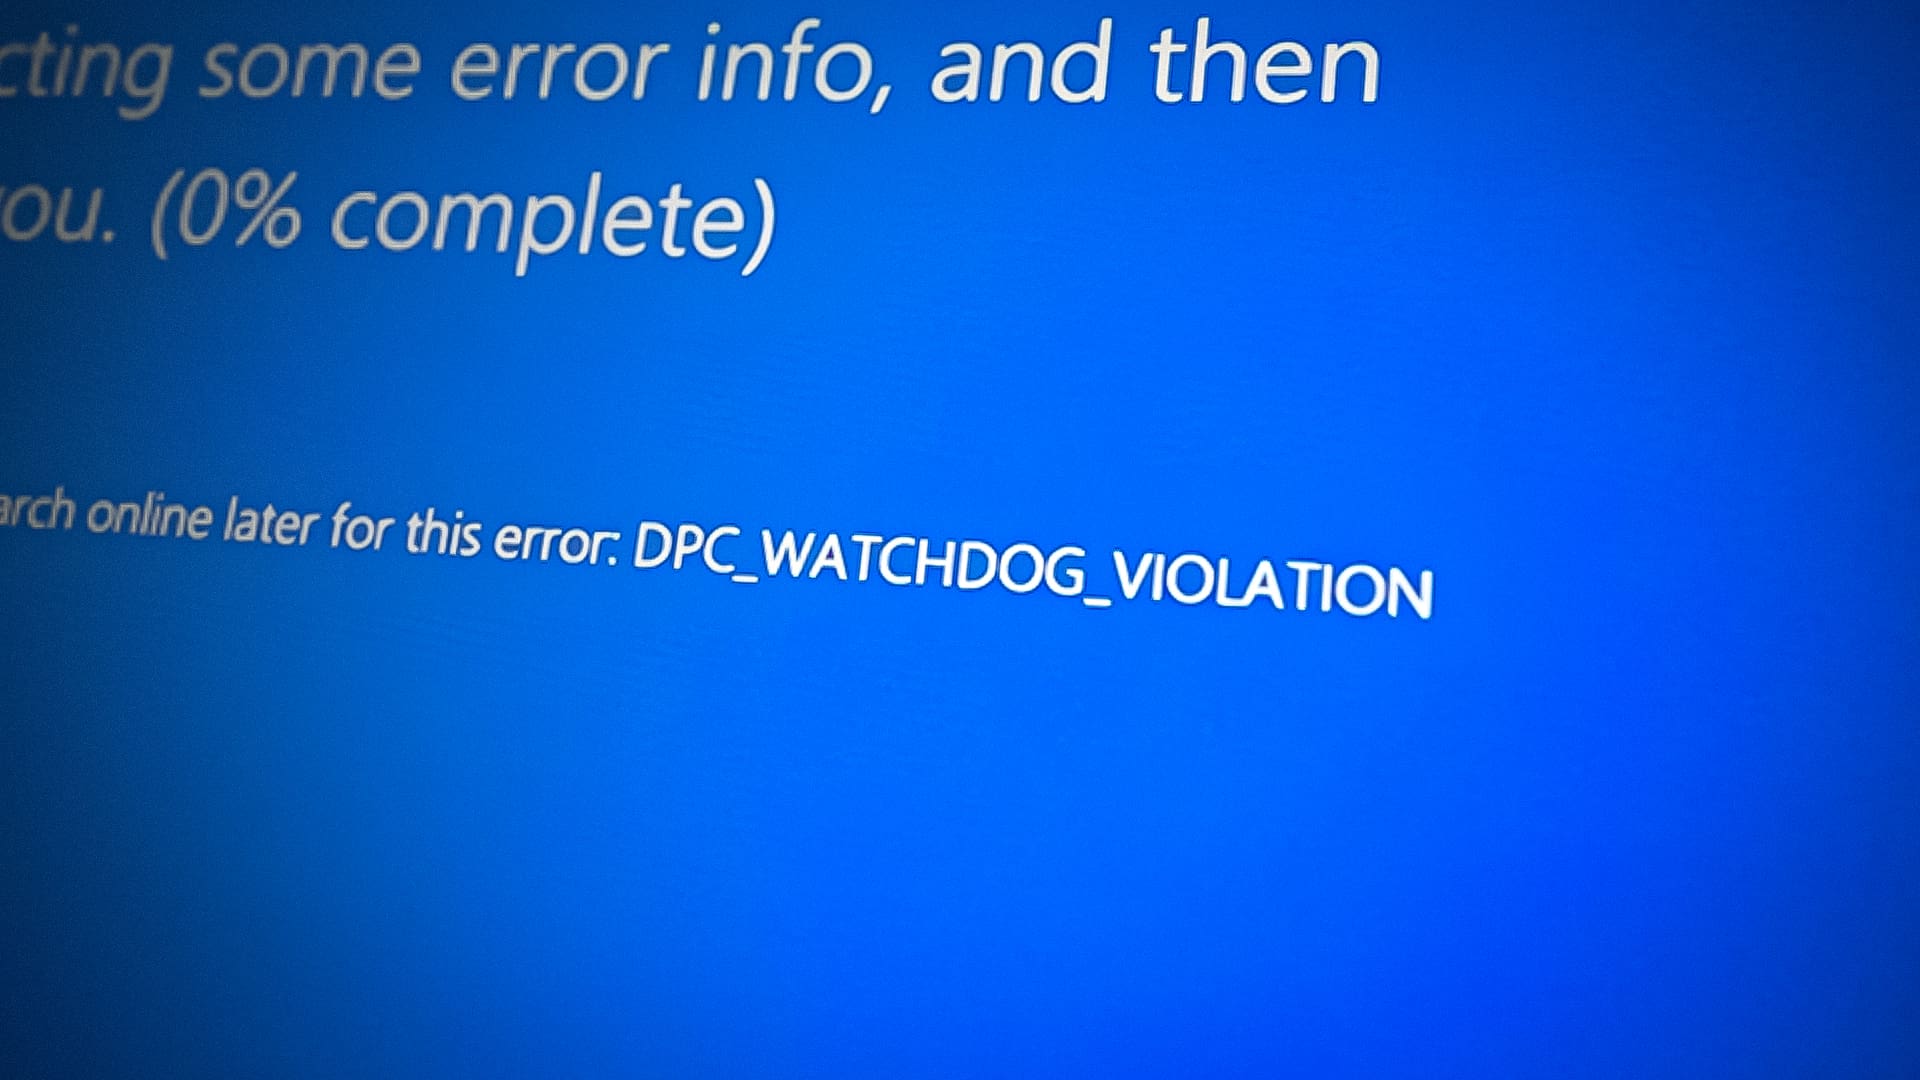 DPC Watchdog Violation